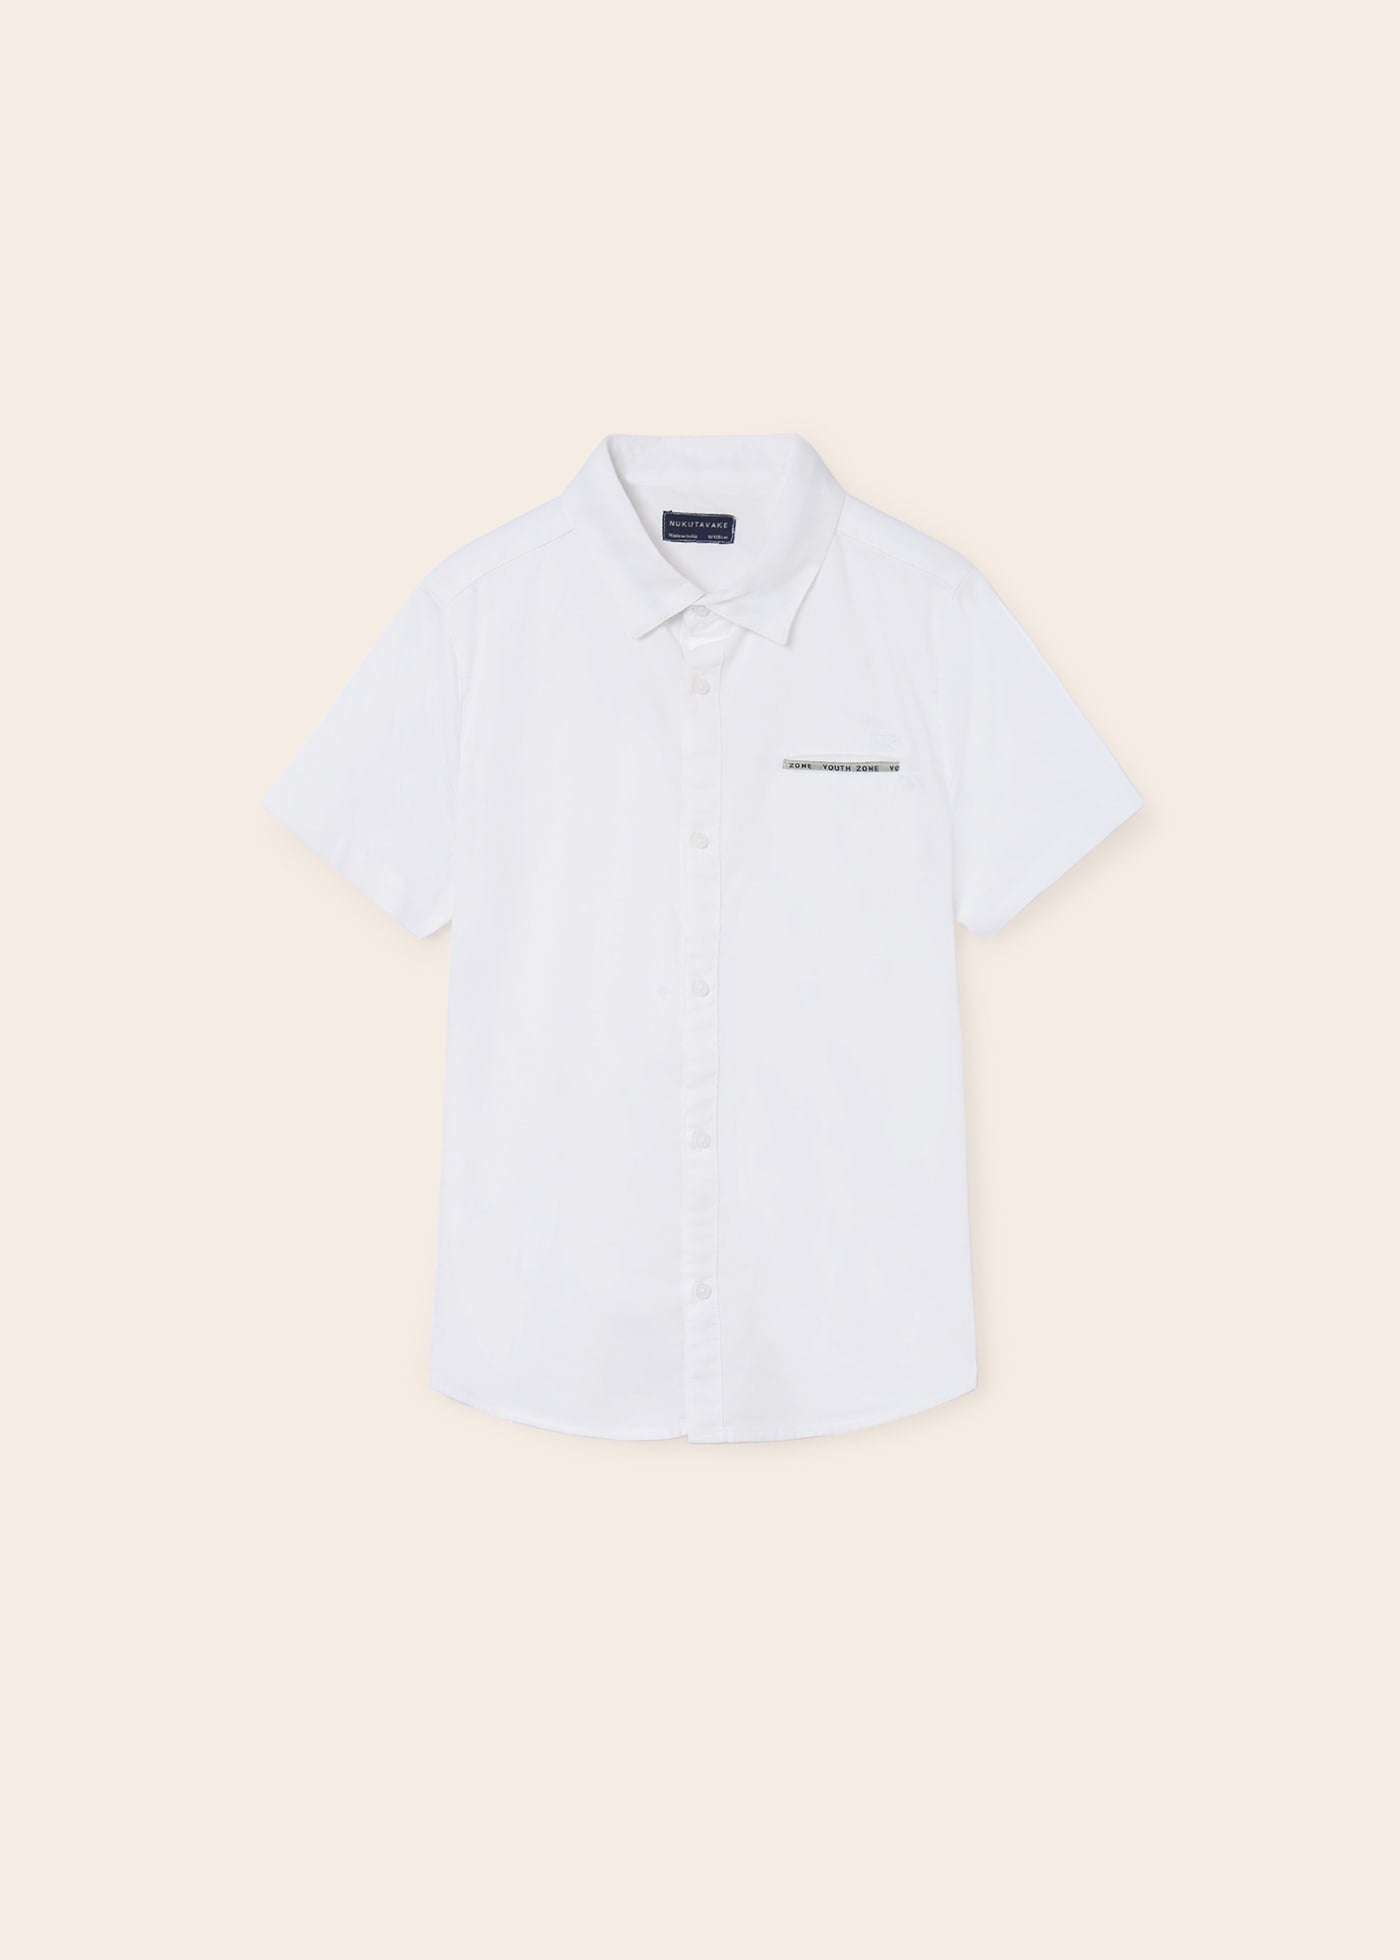 Camiseta Unisex manga corta infantil color blanco – SubliMarket